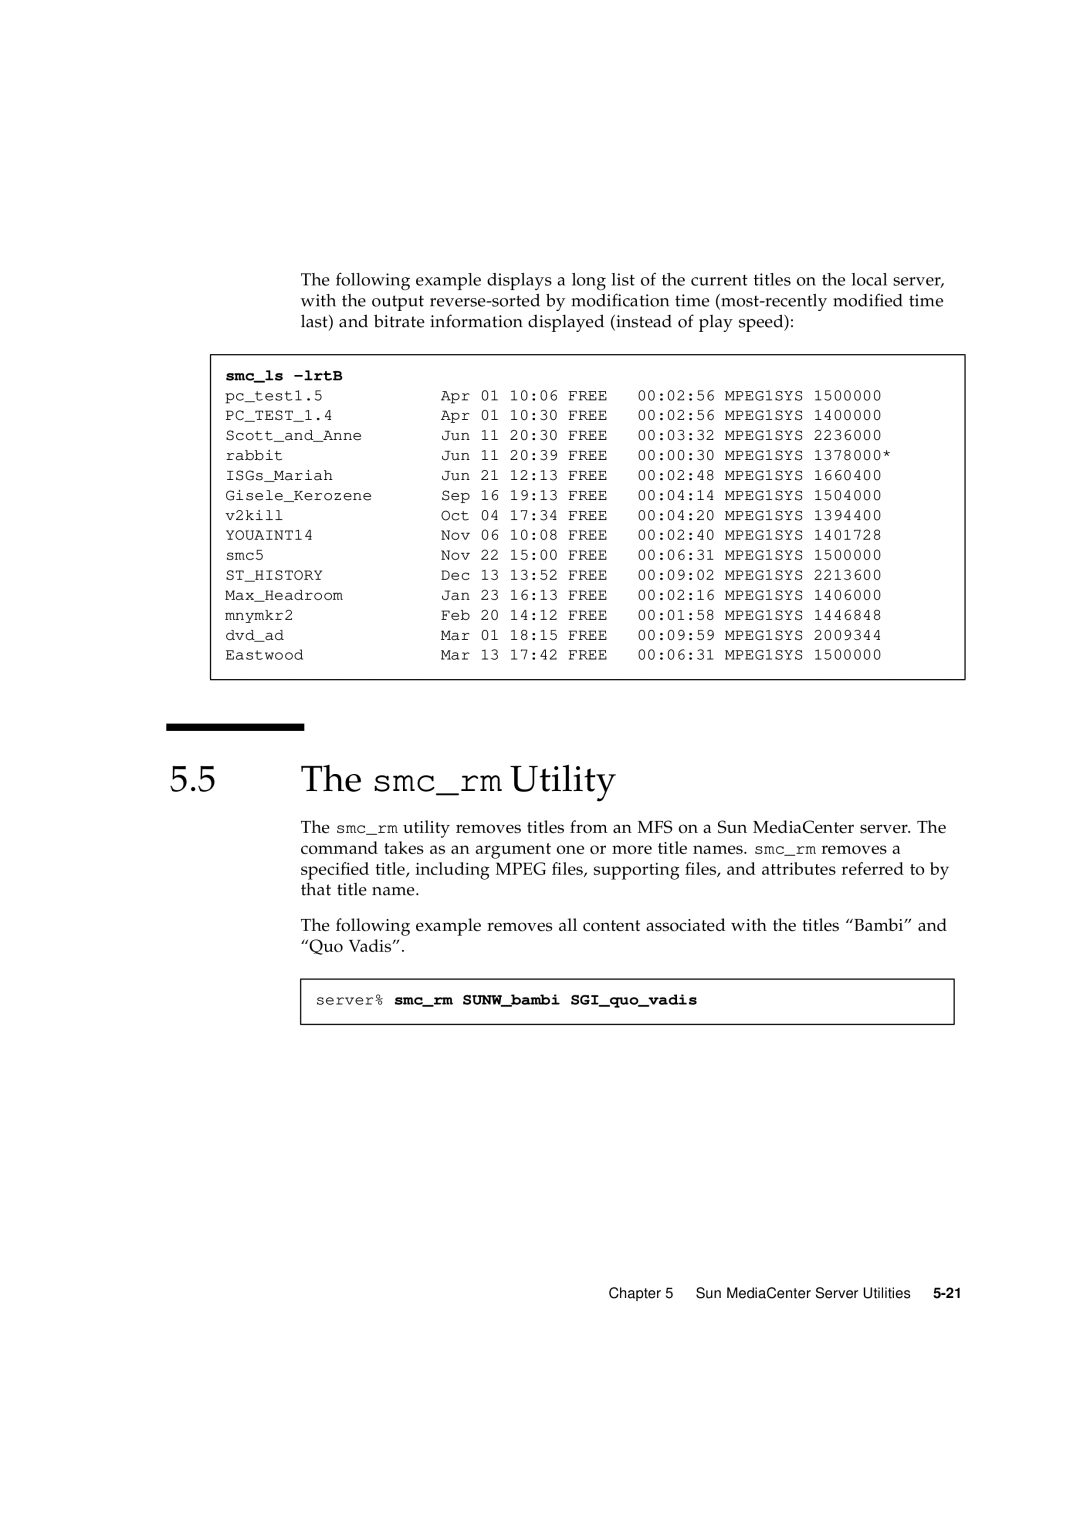 Sun Microsystems 2.1 manual The smcrm Utility, smcls -lrtB, server% smcrm SUNWbambi SGIquovadis 